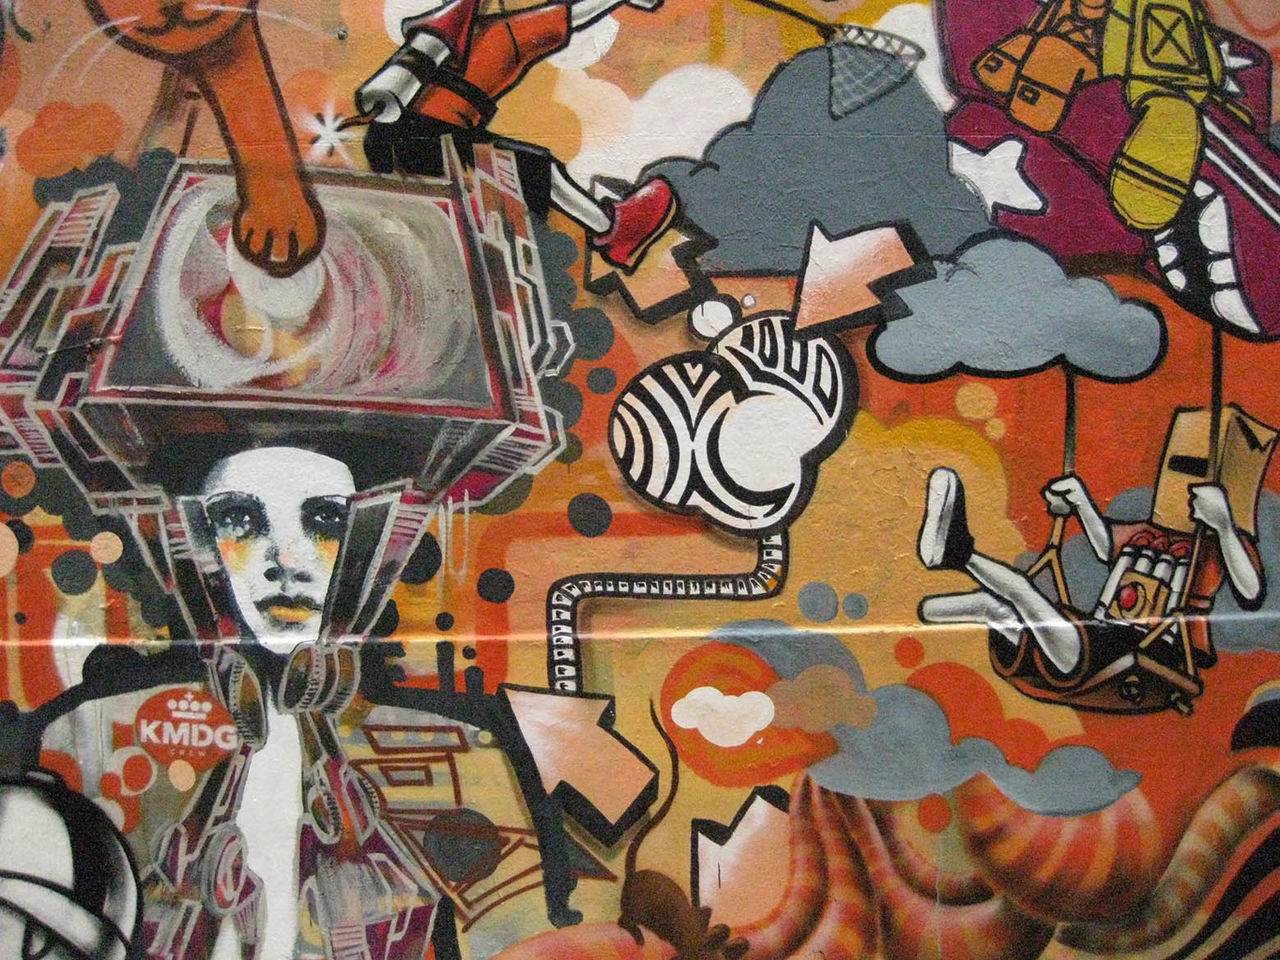 Ottograph, amsterdam, paint, kmdg, graffiti